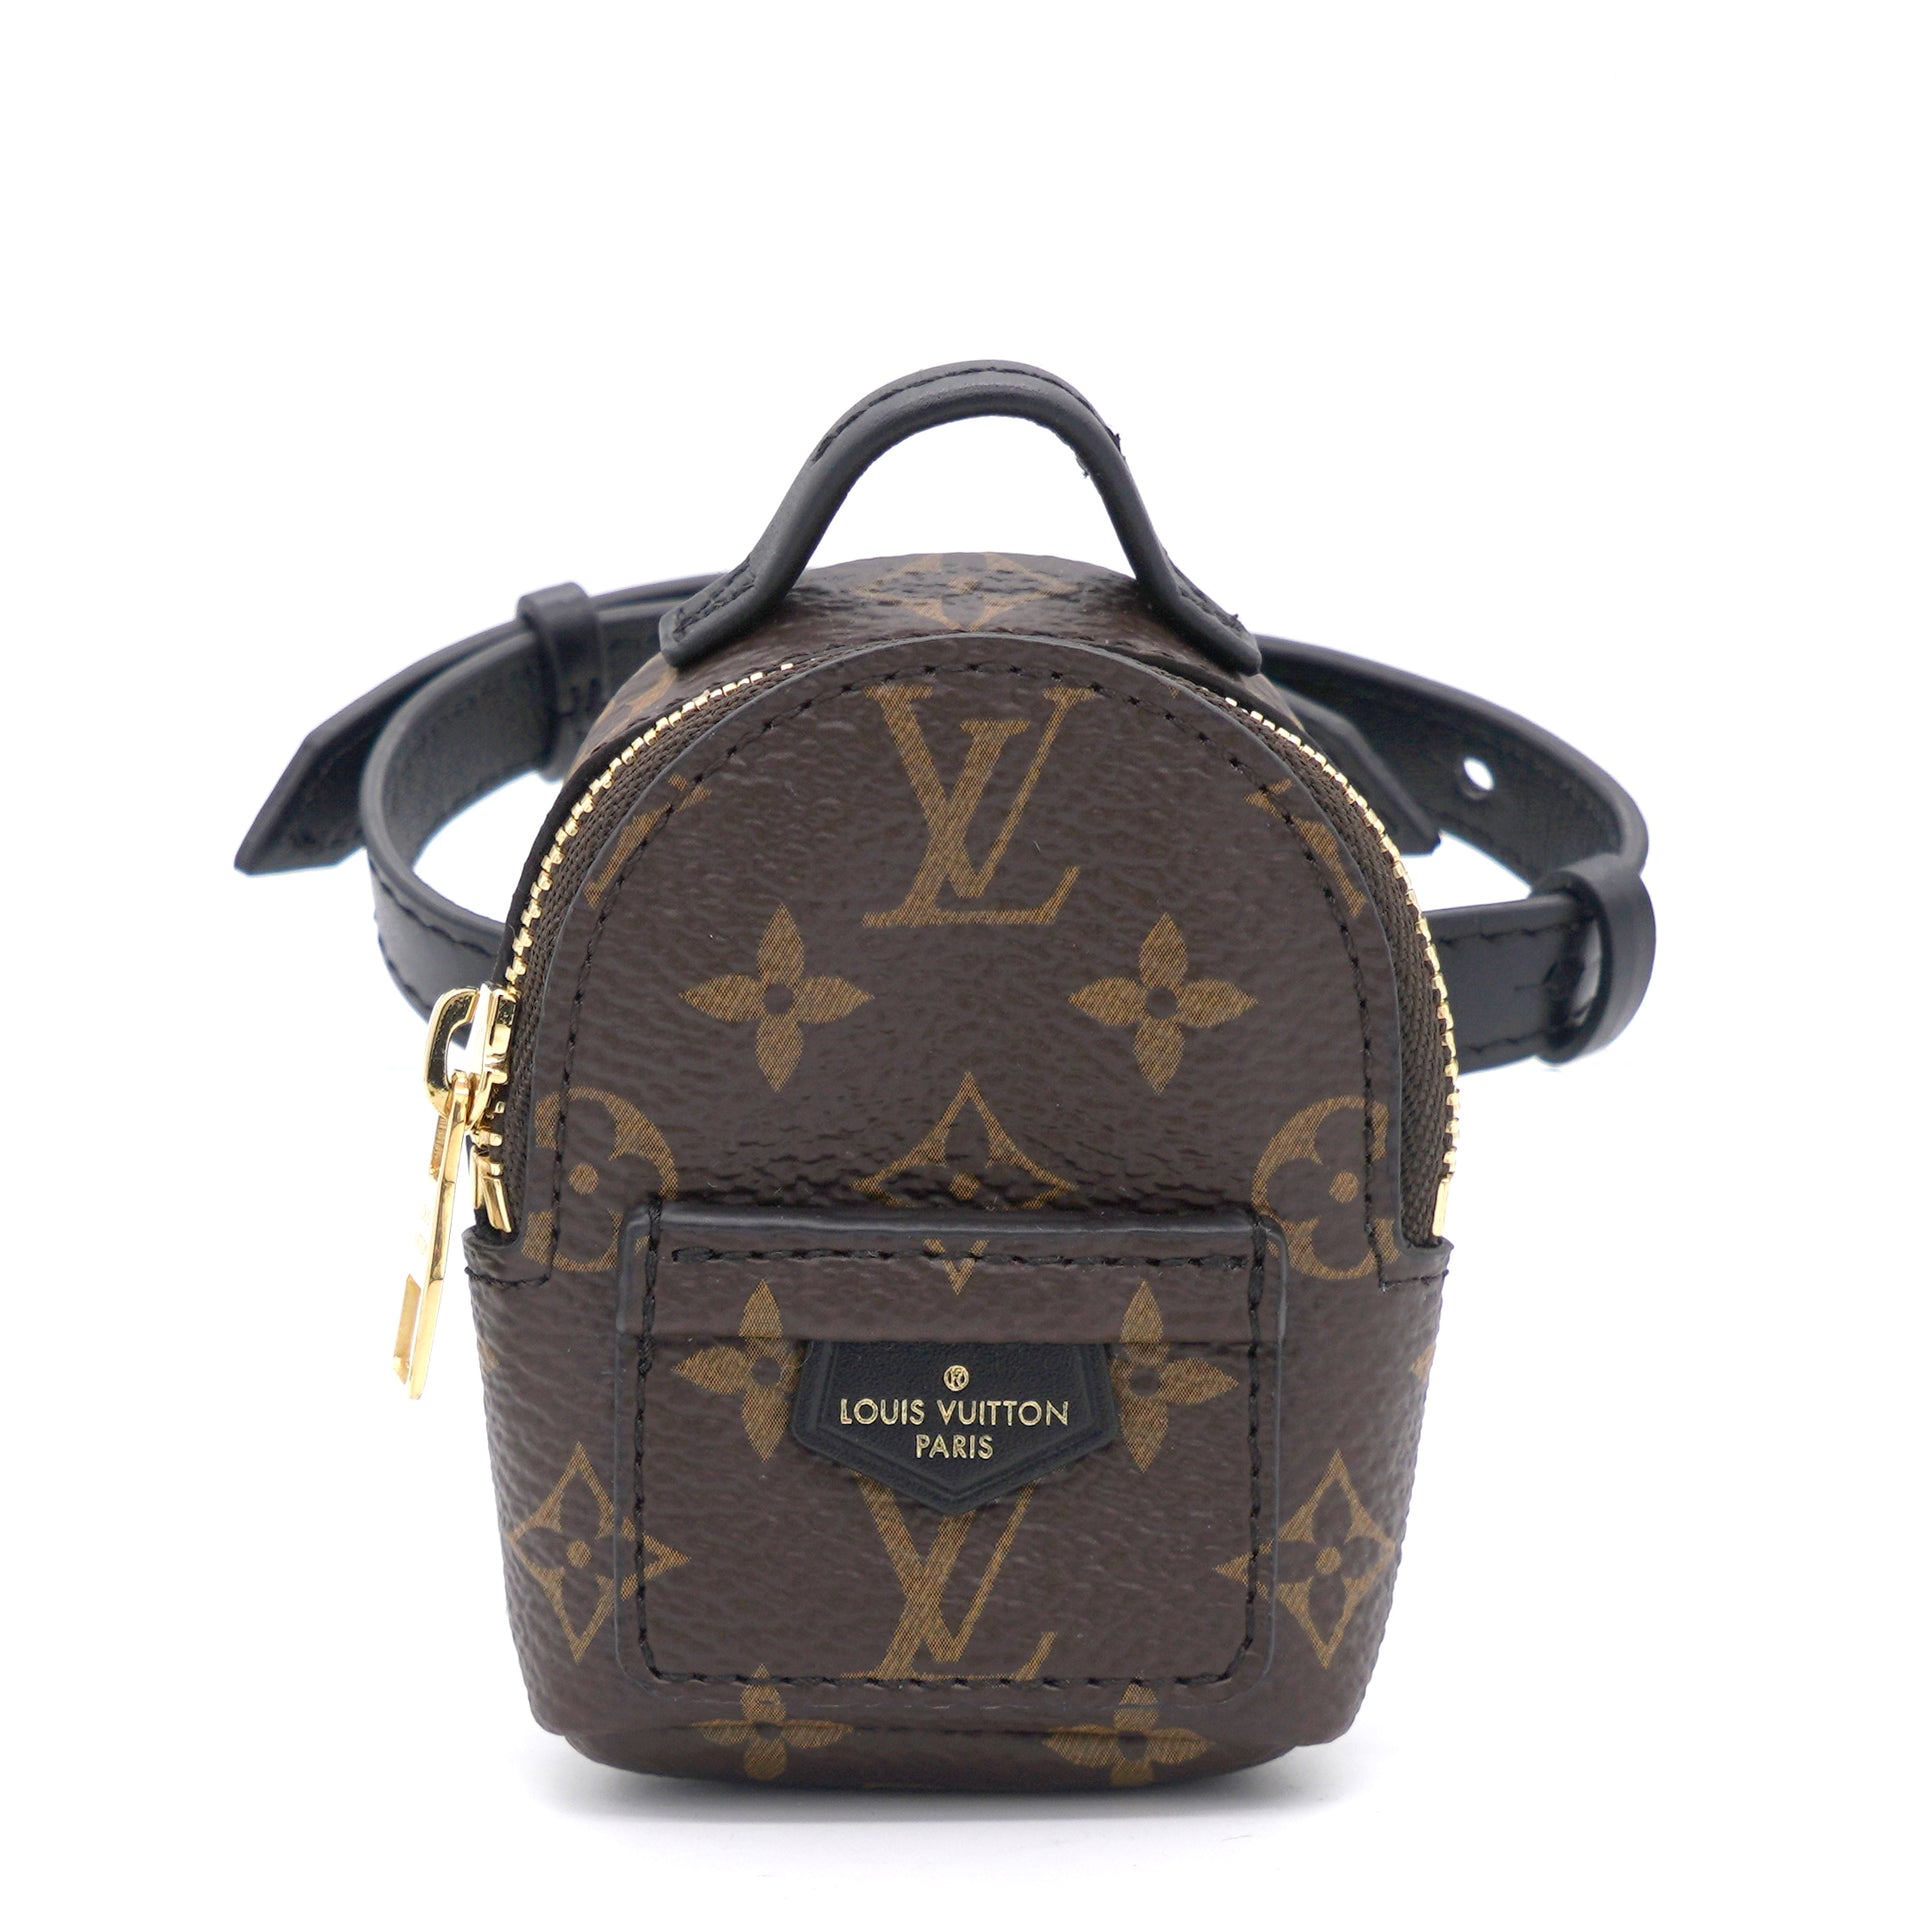 Louis Vuitton LV Bracelet Bag Charm Gold Plated | eBay